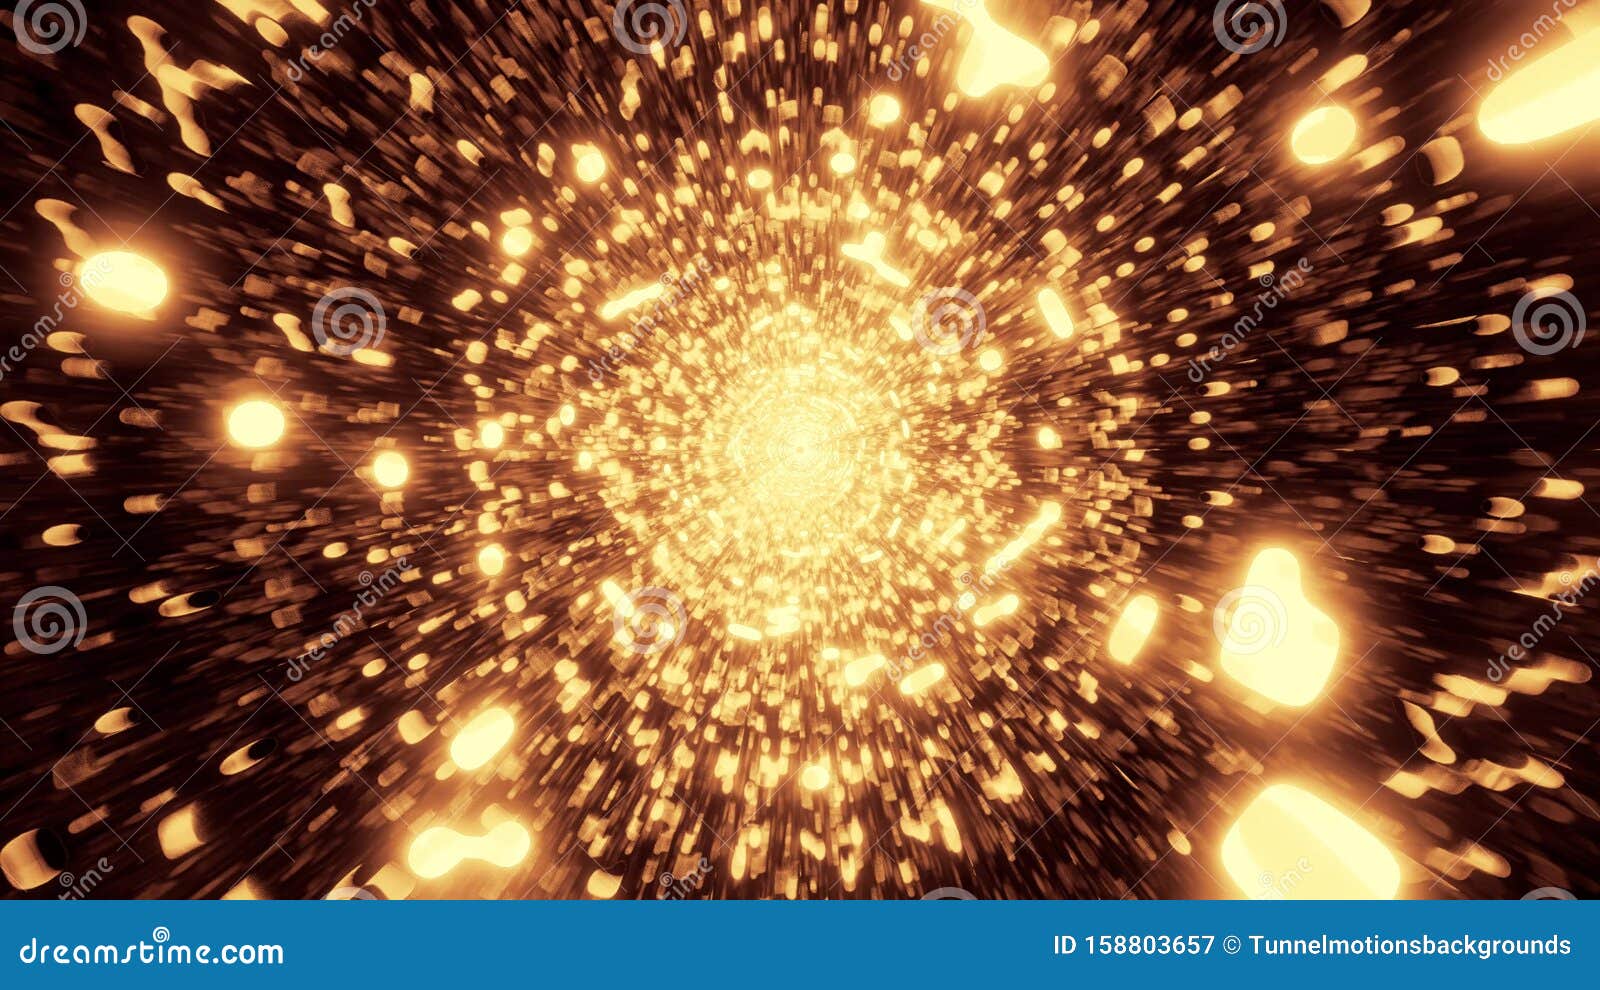 Abstract Golden Design Galaxy 3d Illustration Background Wallpaper